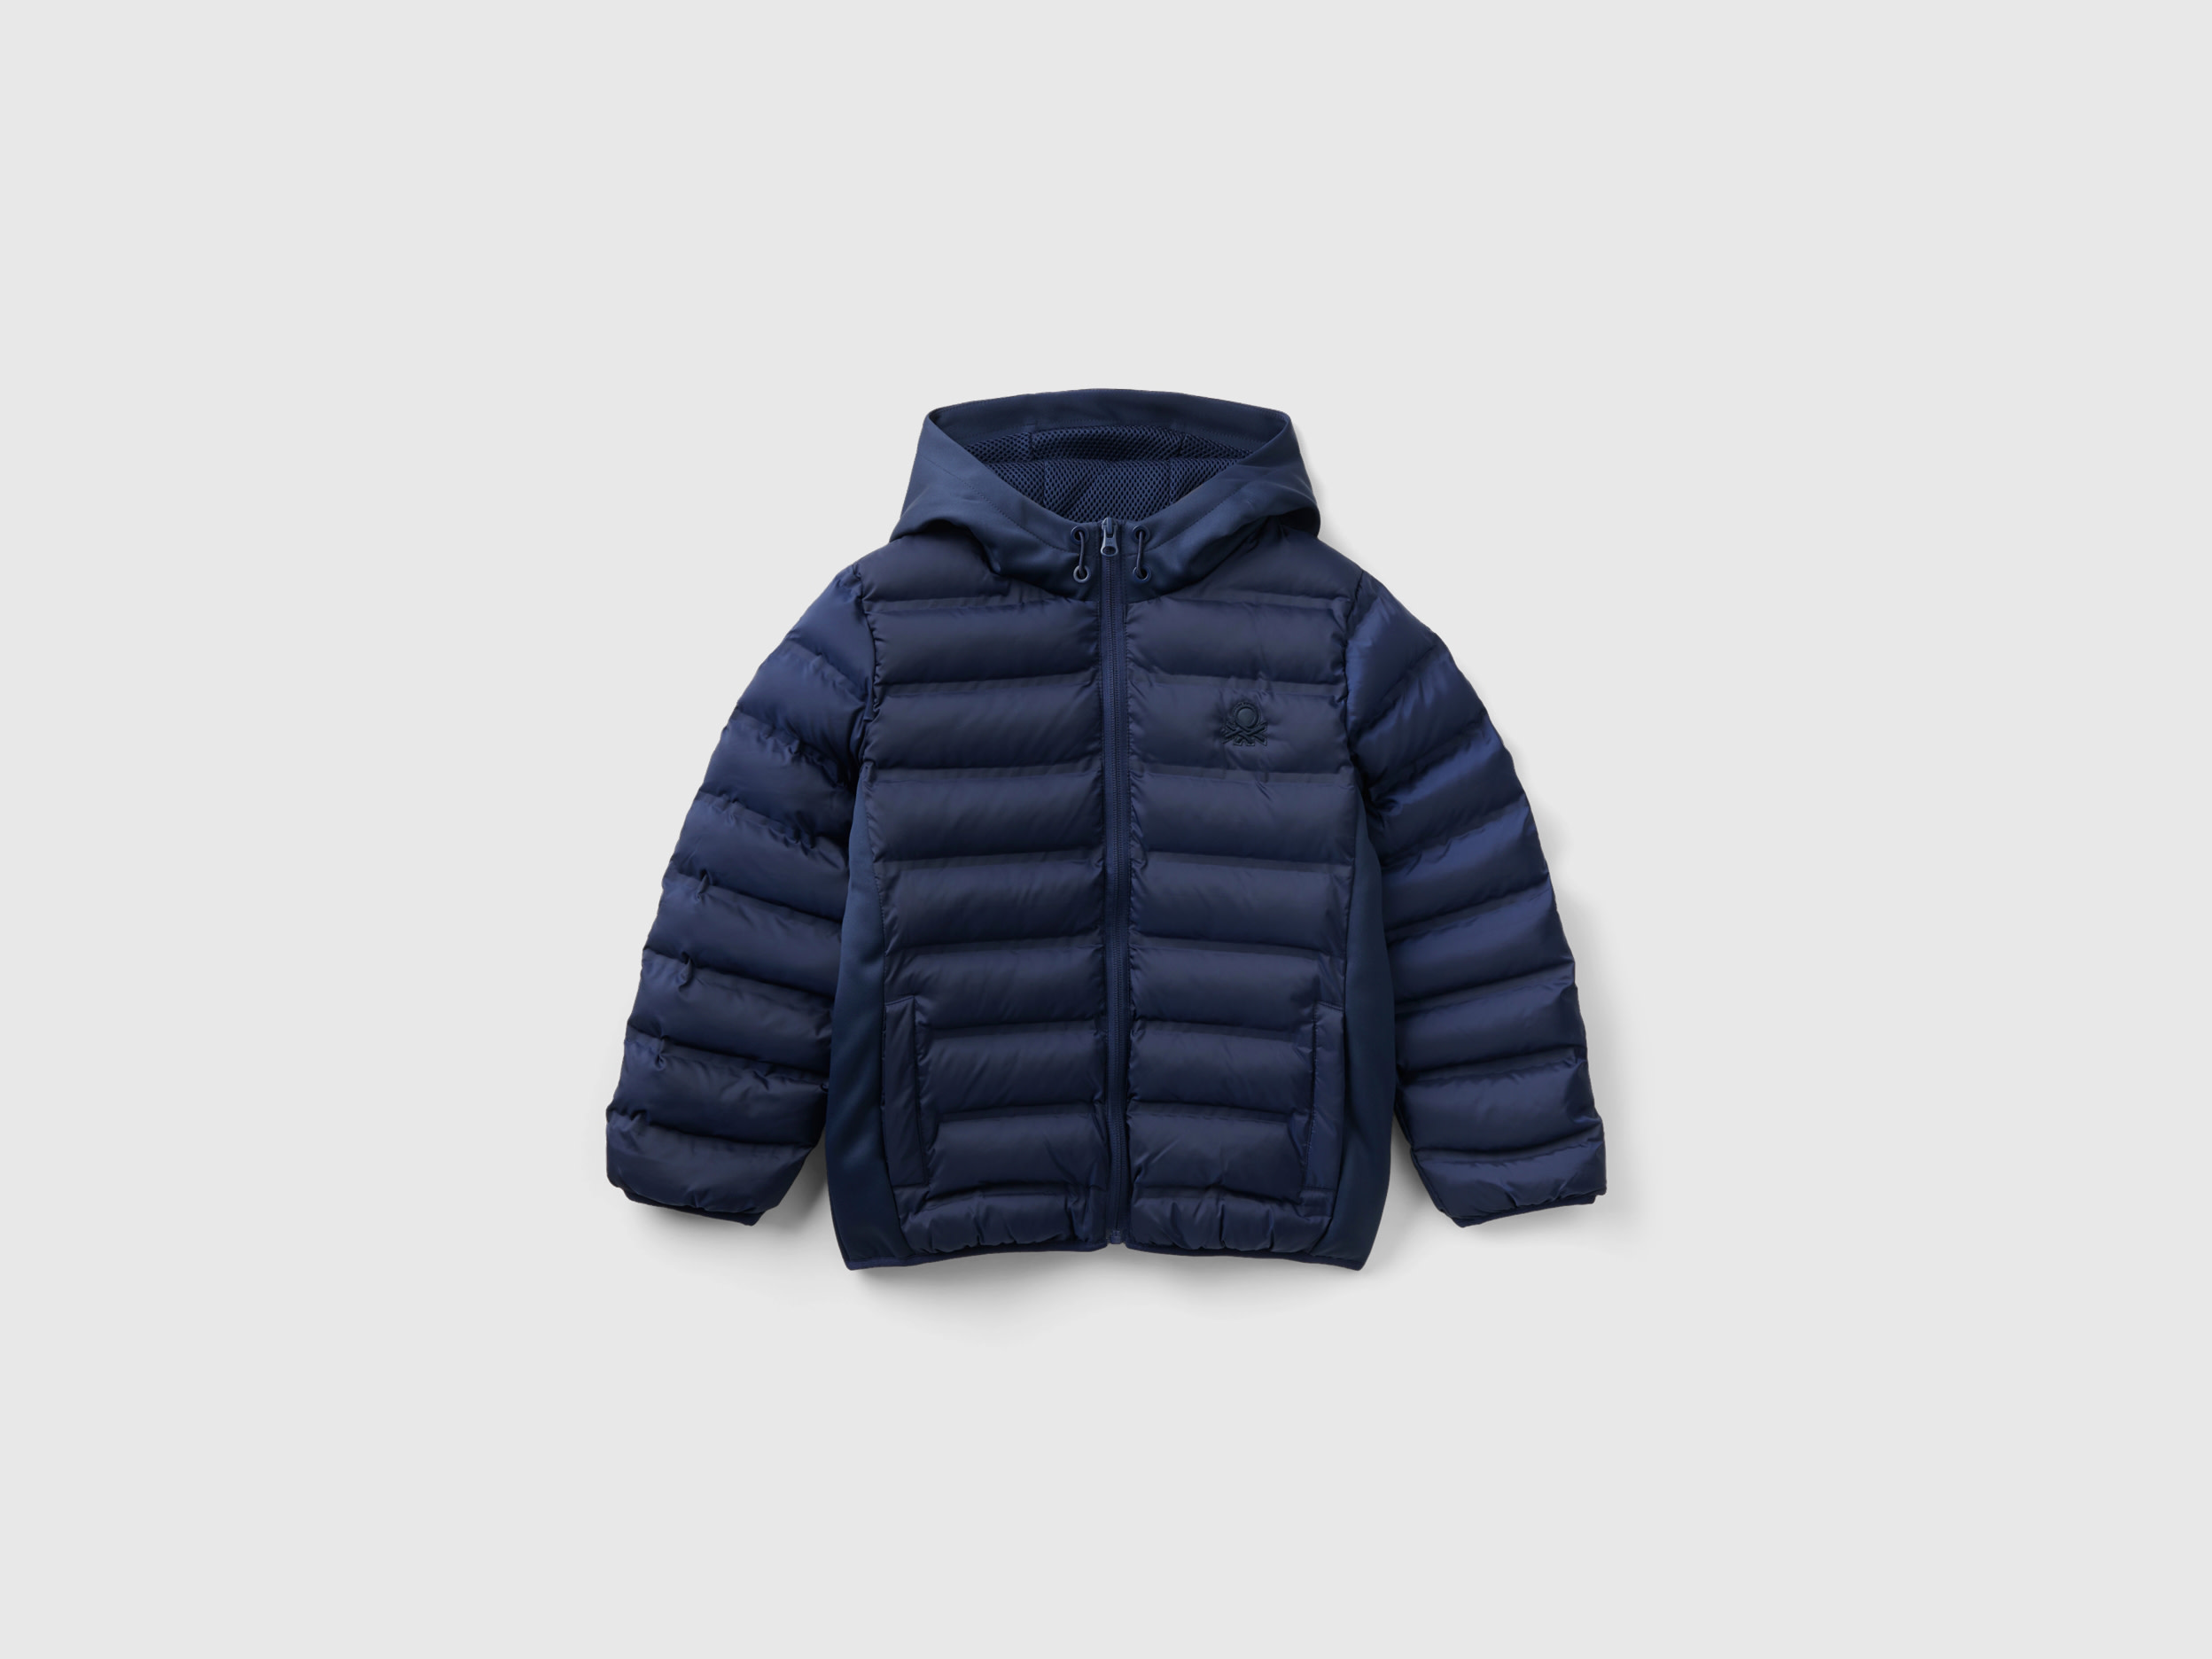 Benetton, Jacket With Neoprene Details, size L, Dark Blue, Kids